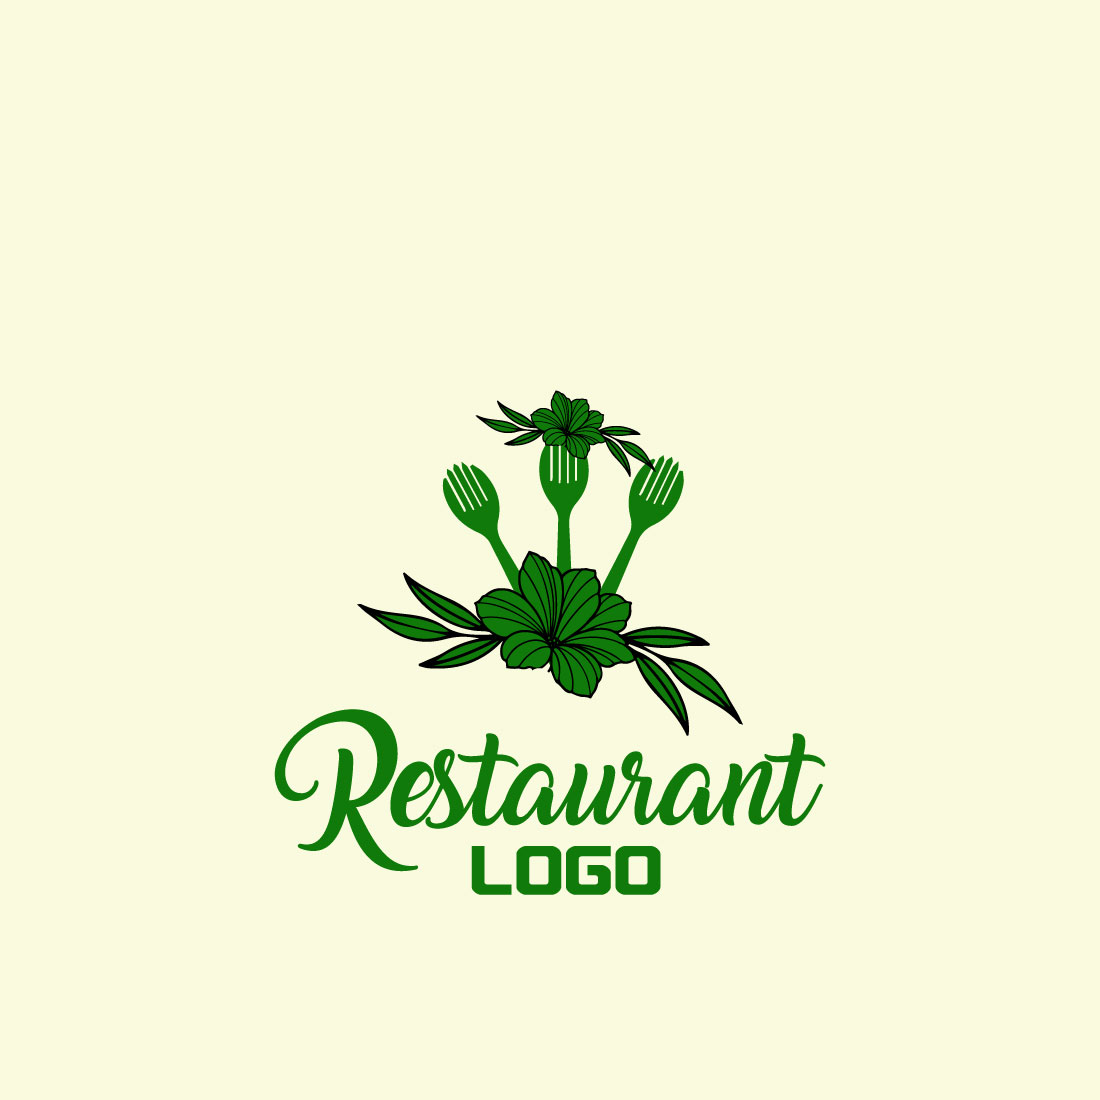 Free Floral Restaurant Logo cover image.